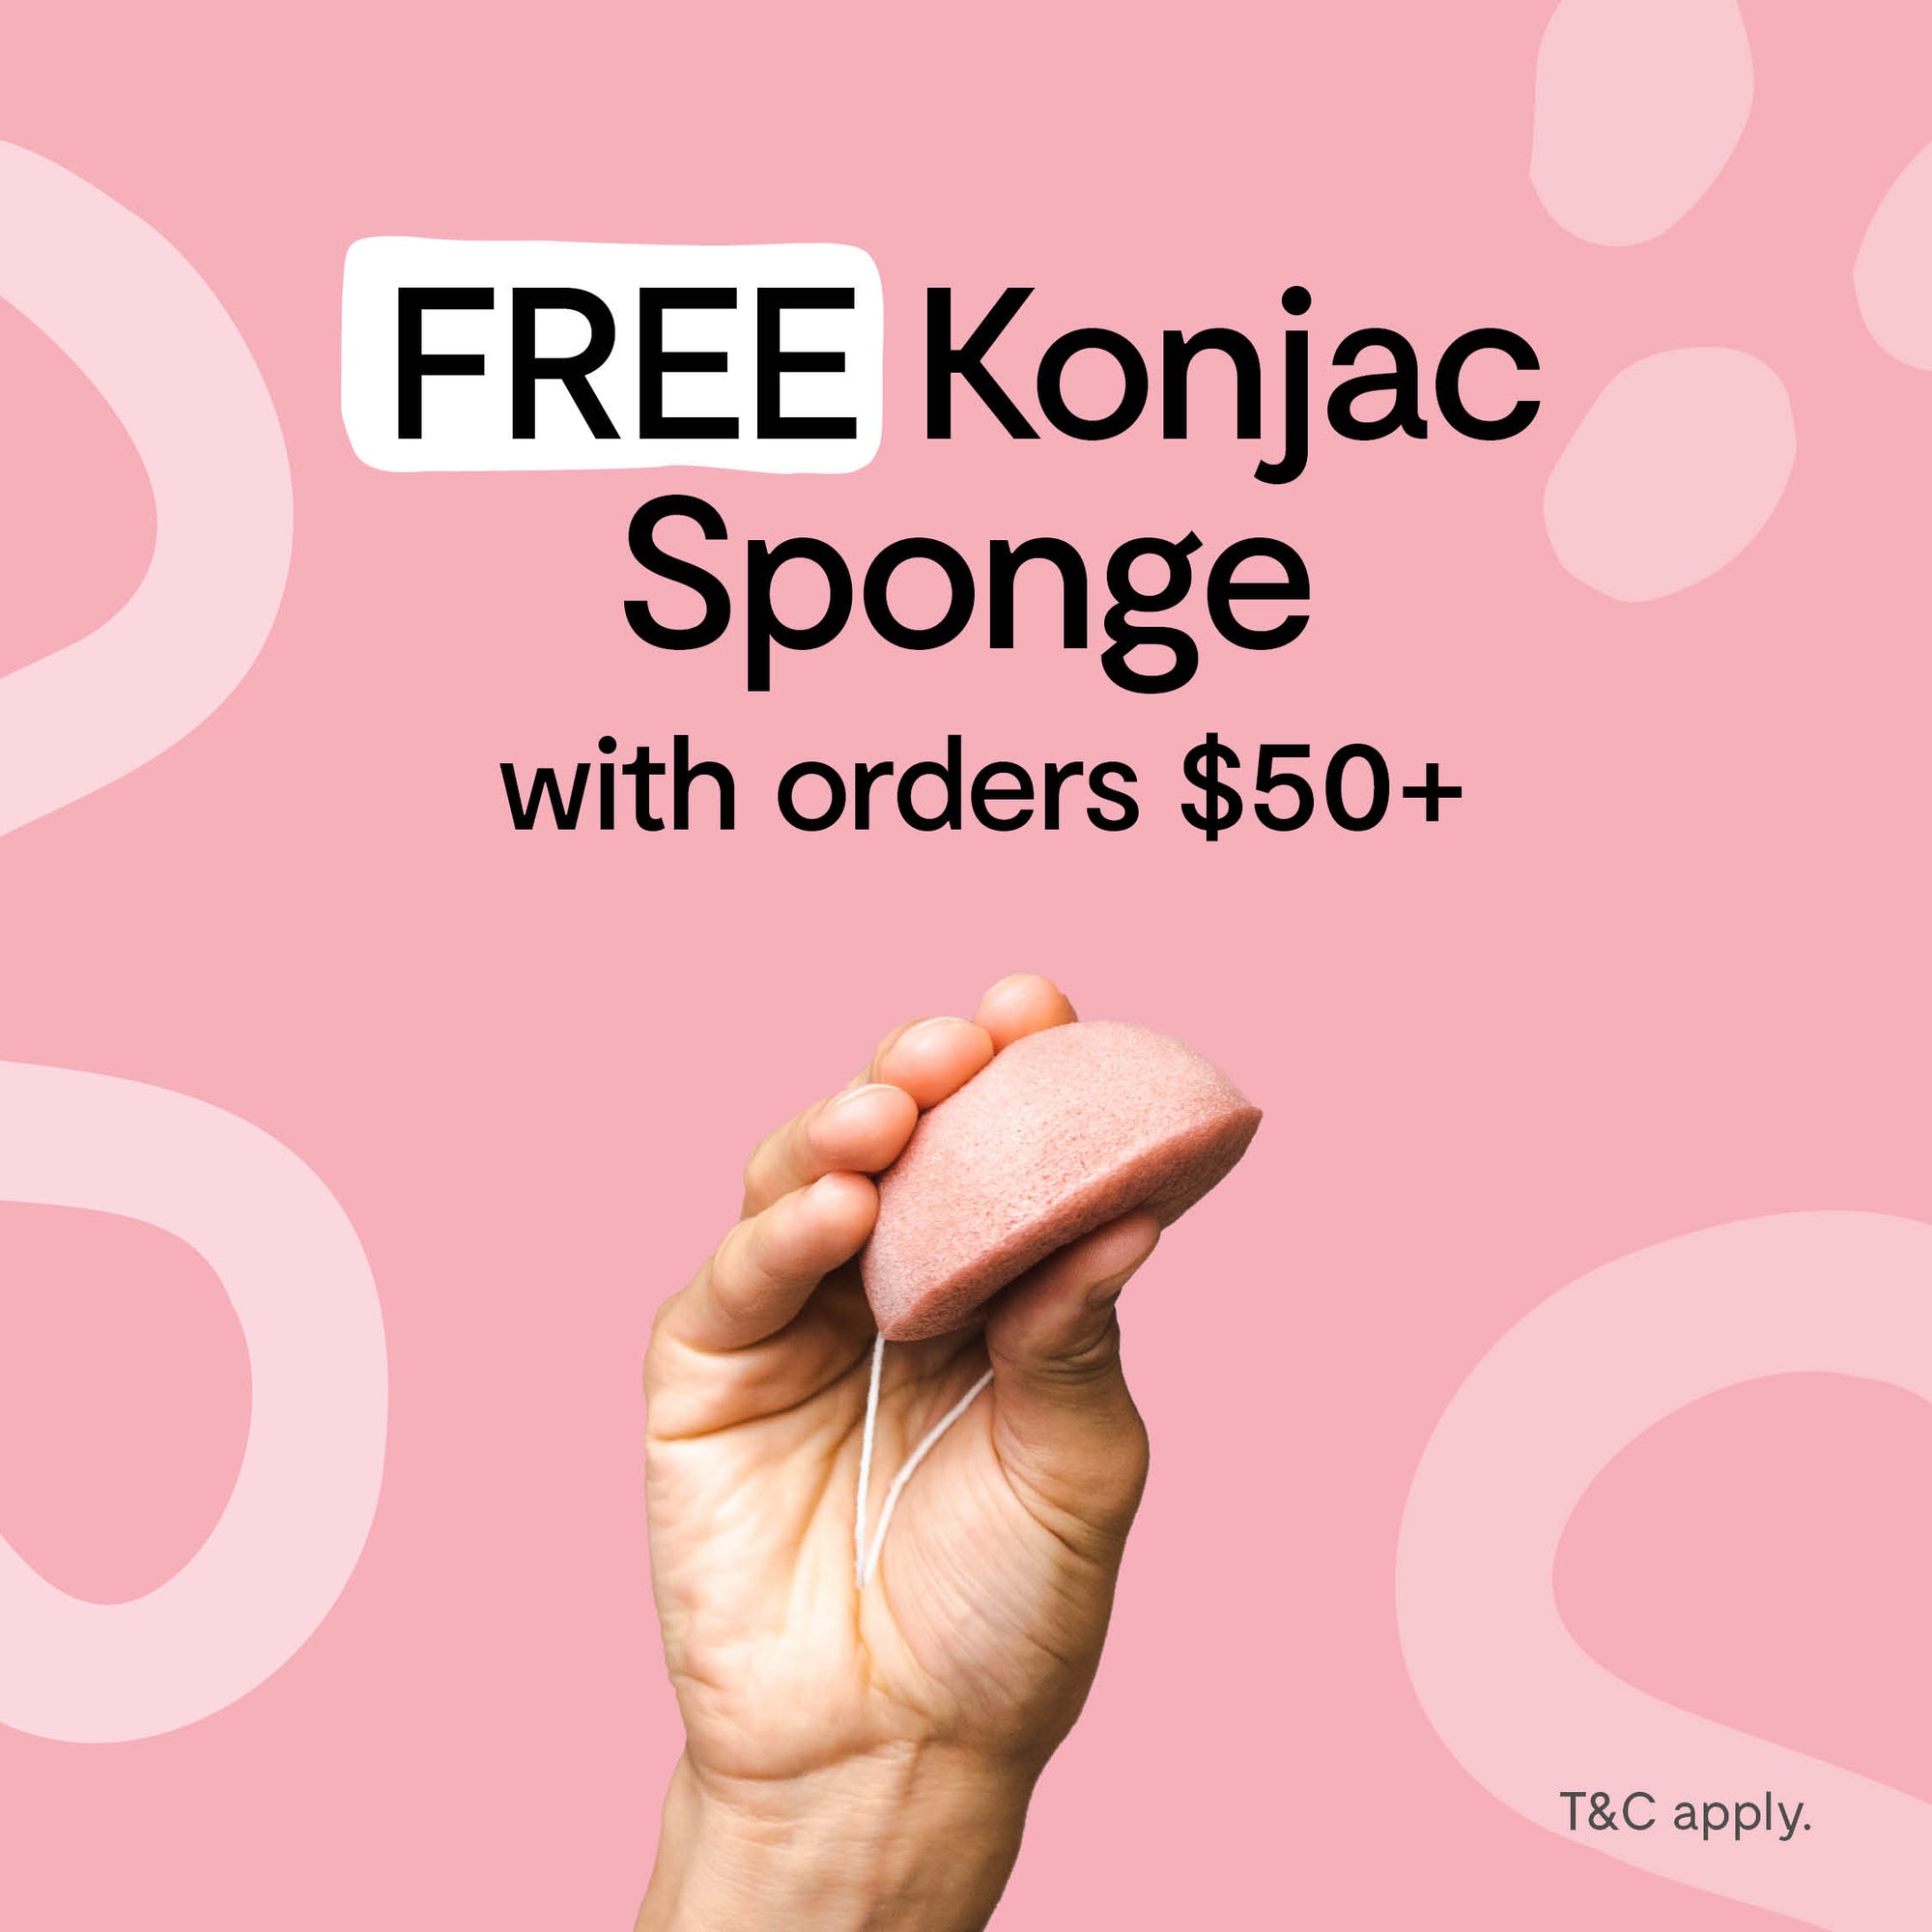 Free Konjac Sponge with orders over $50